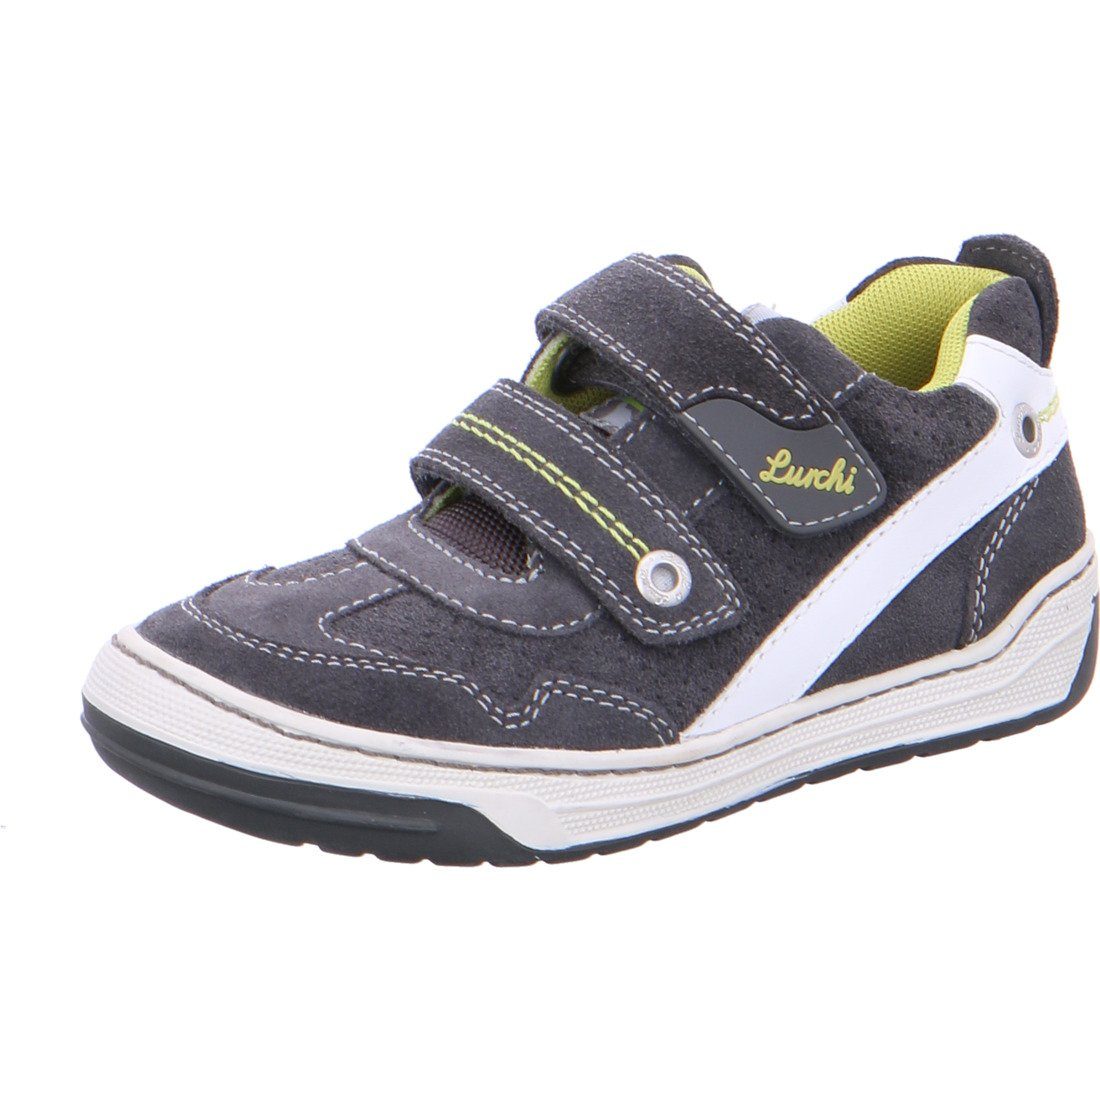 Bestpreis Lurchi - Jungen Sneaker Sneaker Rauleder grau Schuhe, 036954 Lurchi Bruce